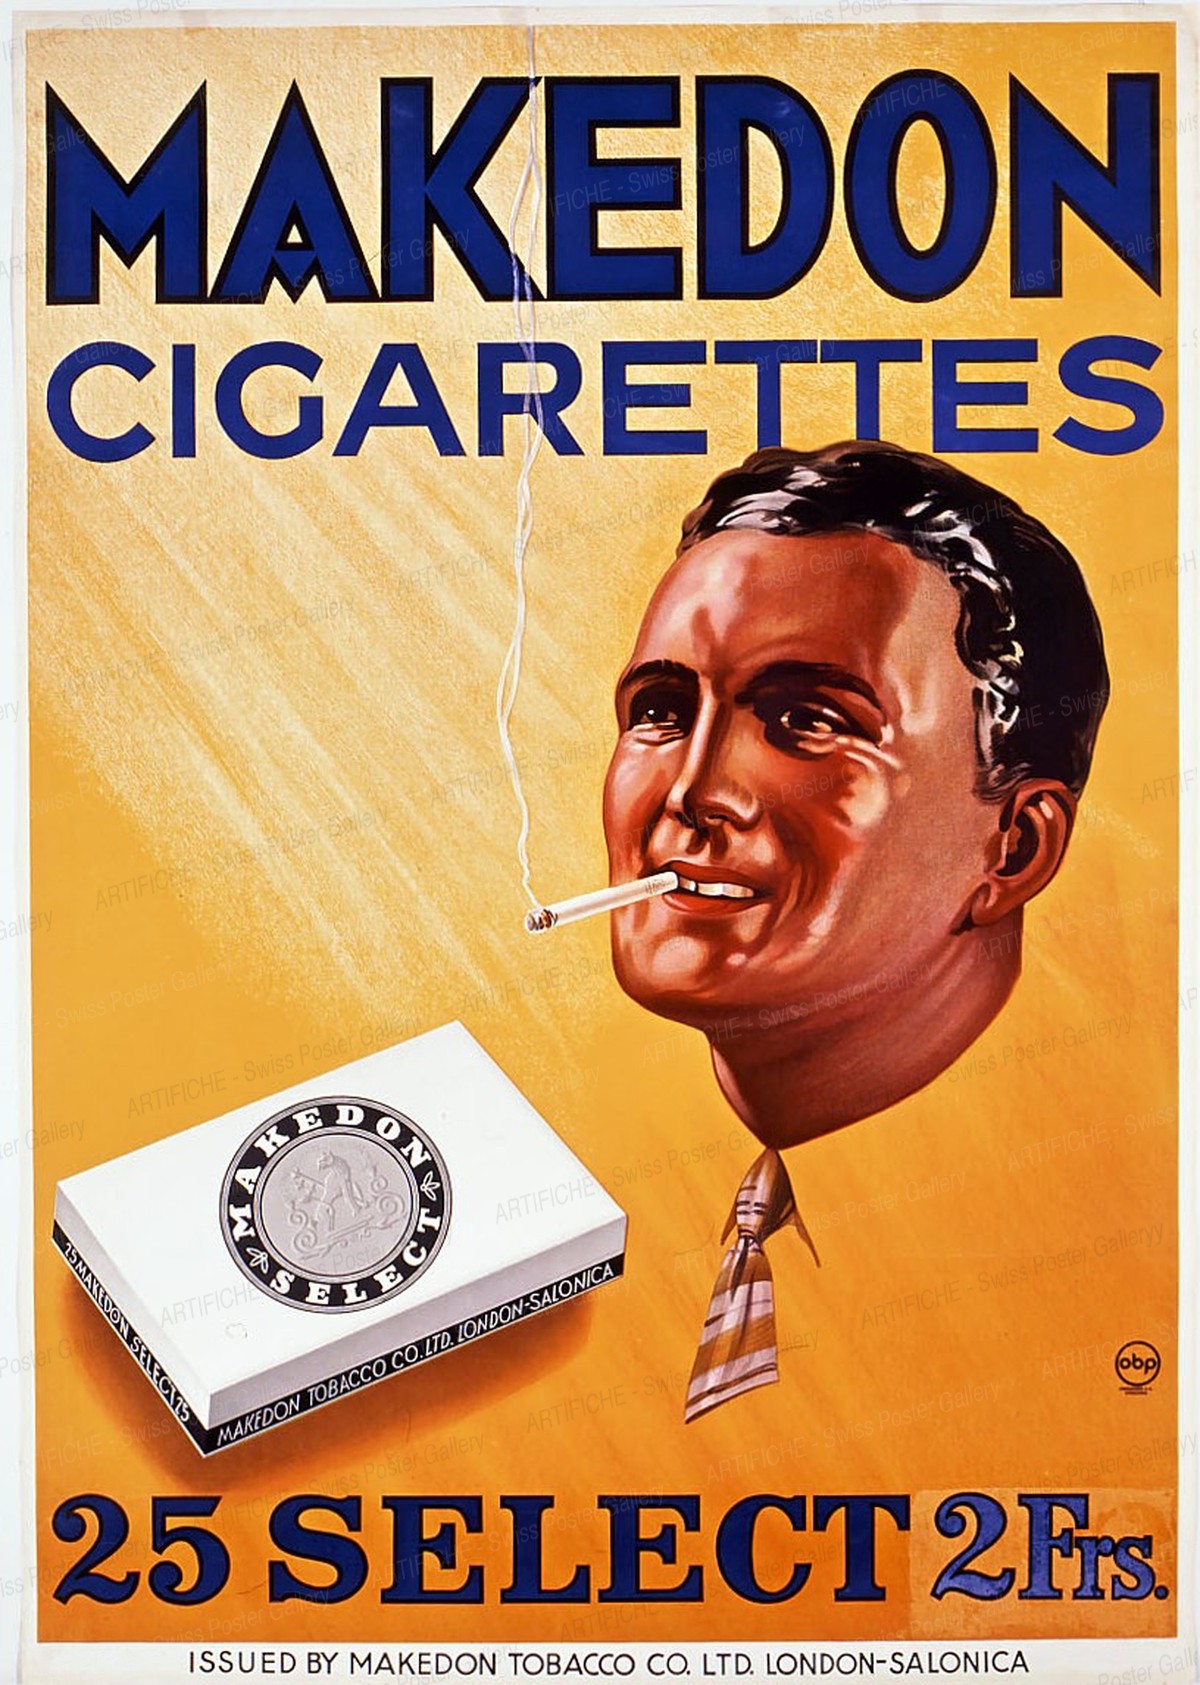 Makedon Cigarettes – Makedon Tobacco Co. Ltd. London-Salonica – 25 Select 2 Frs., Artist unknown